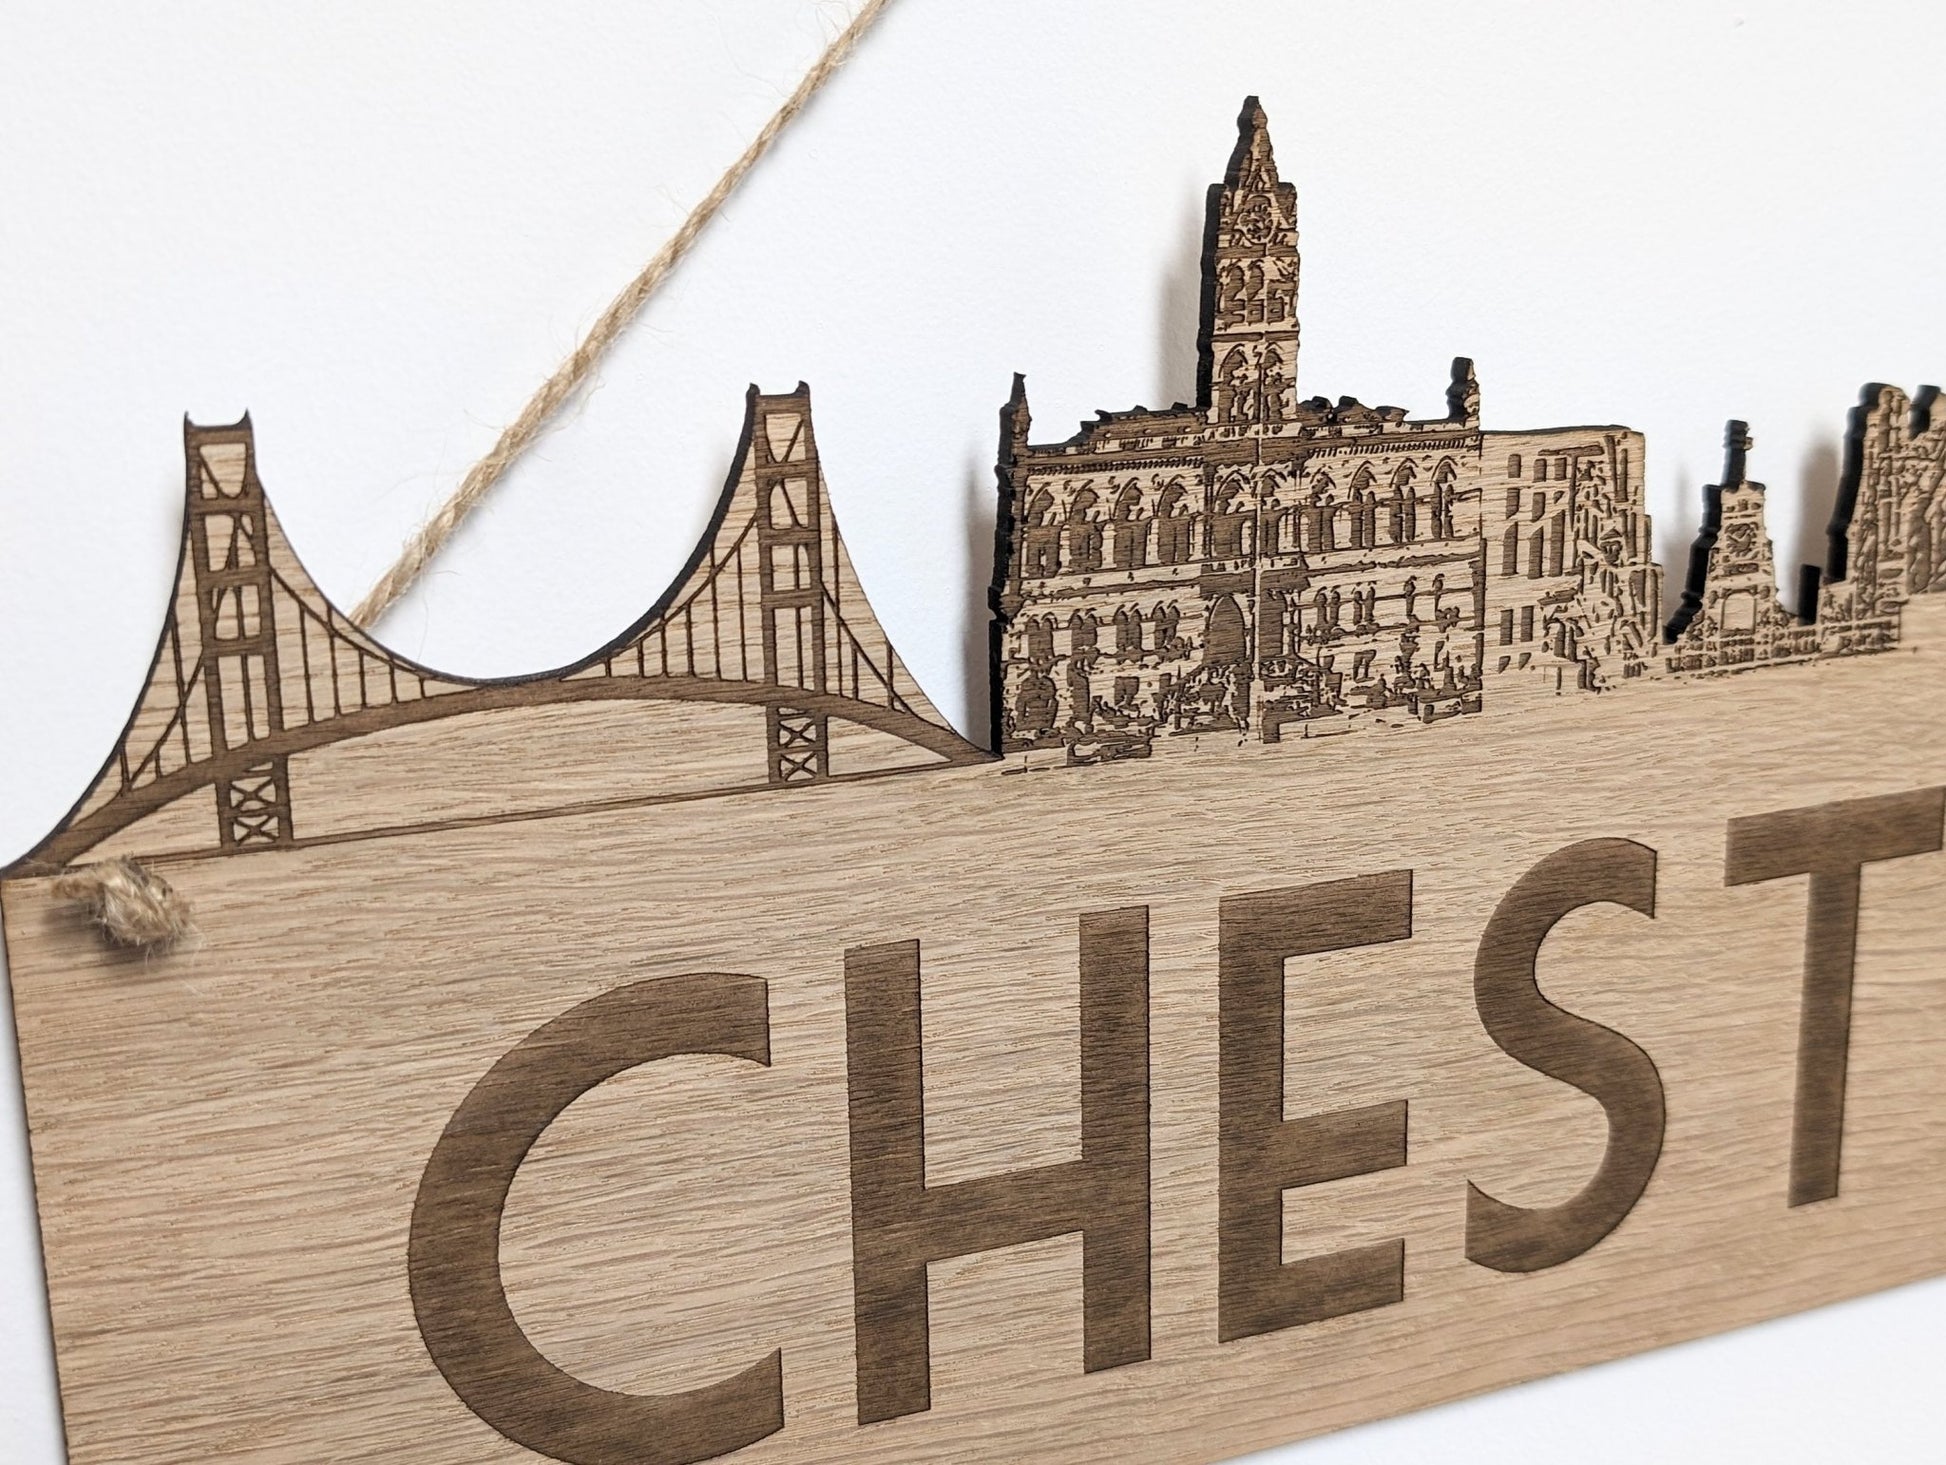 Chester City Wooden Sign – Iconic Landmarks Design - CherryGroveCraft